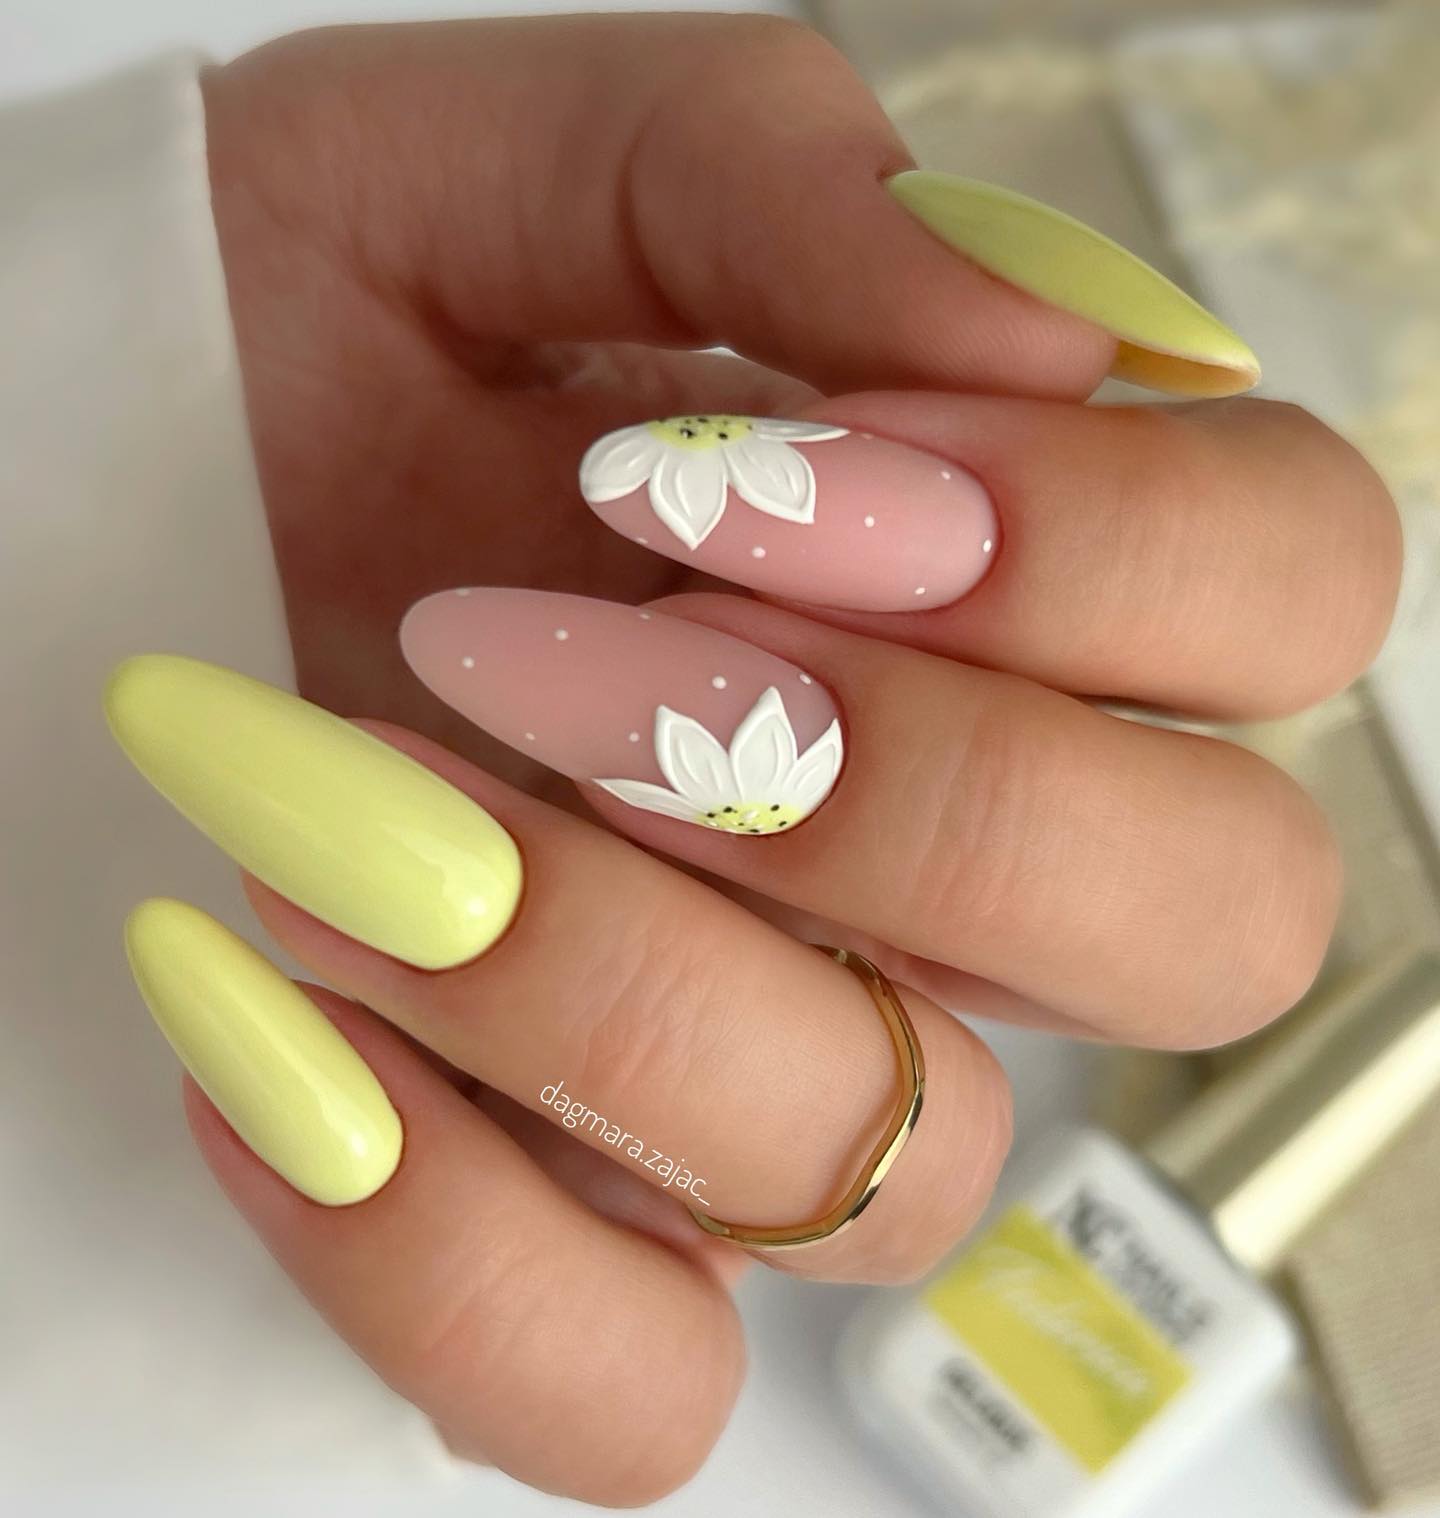 Spring flower nails